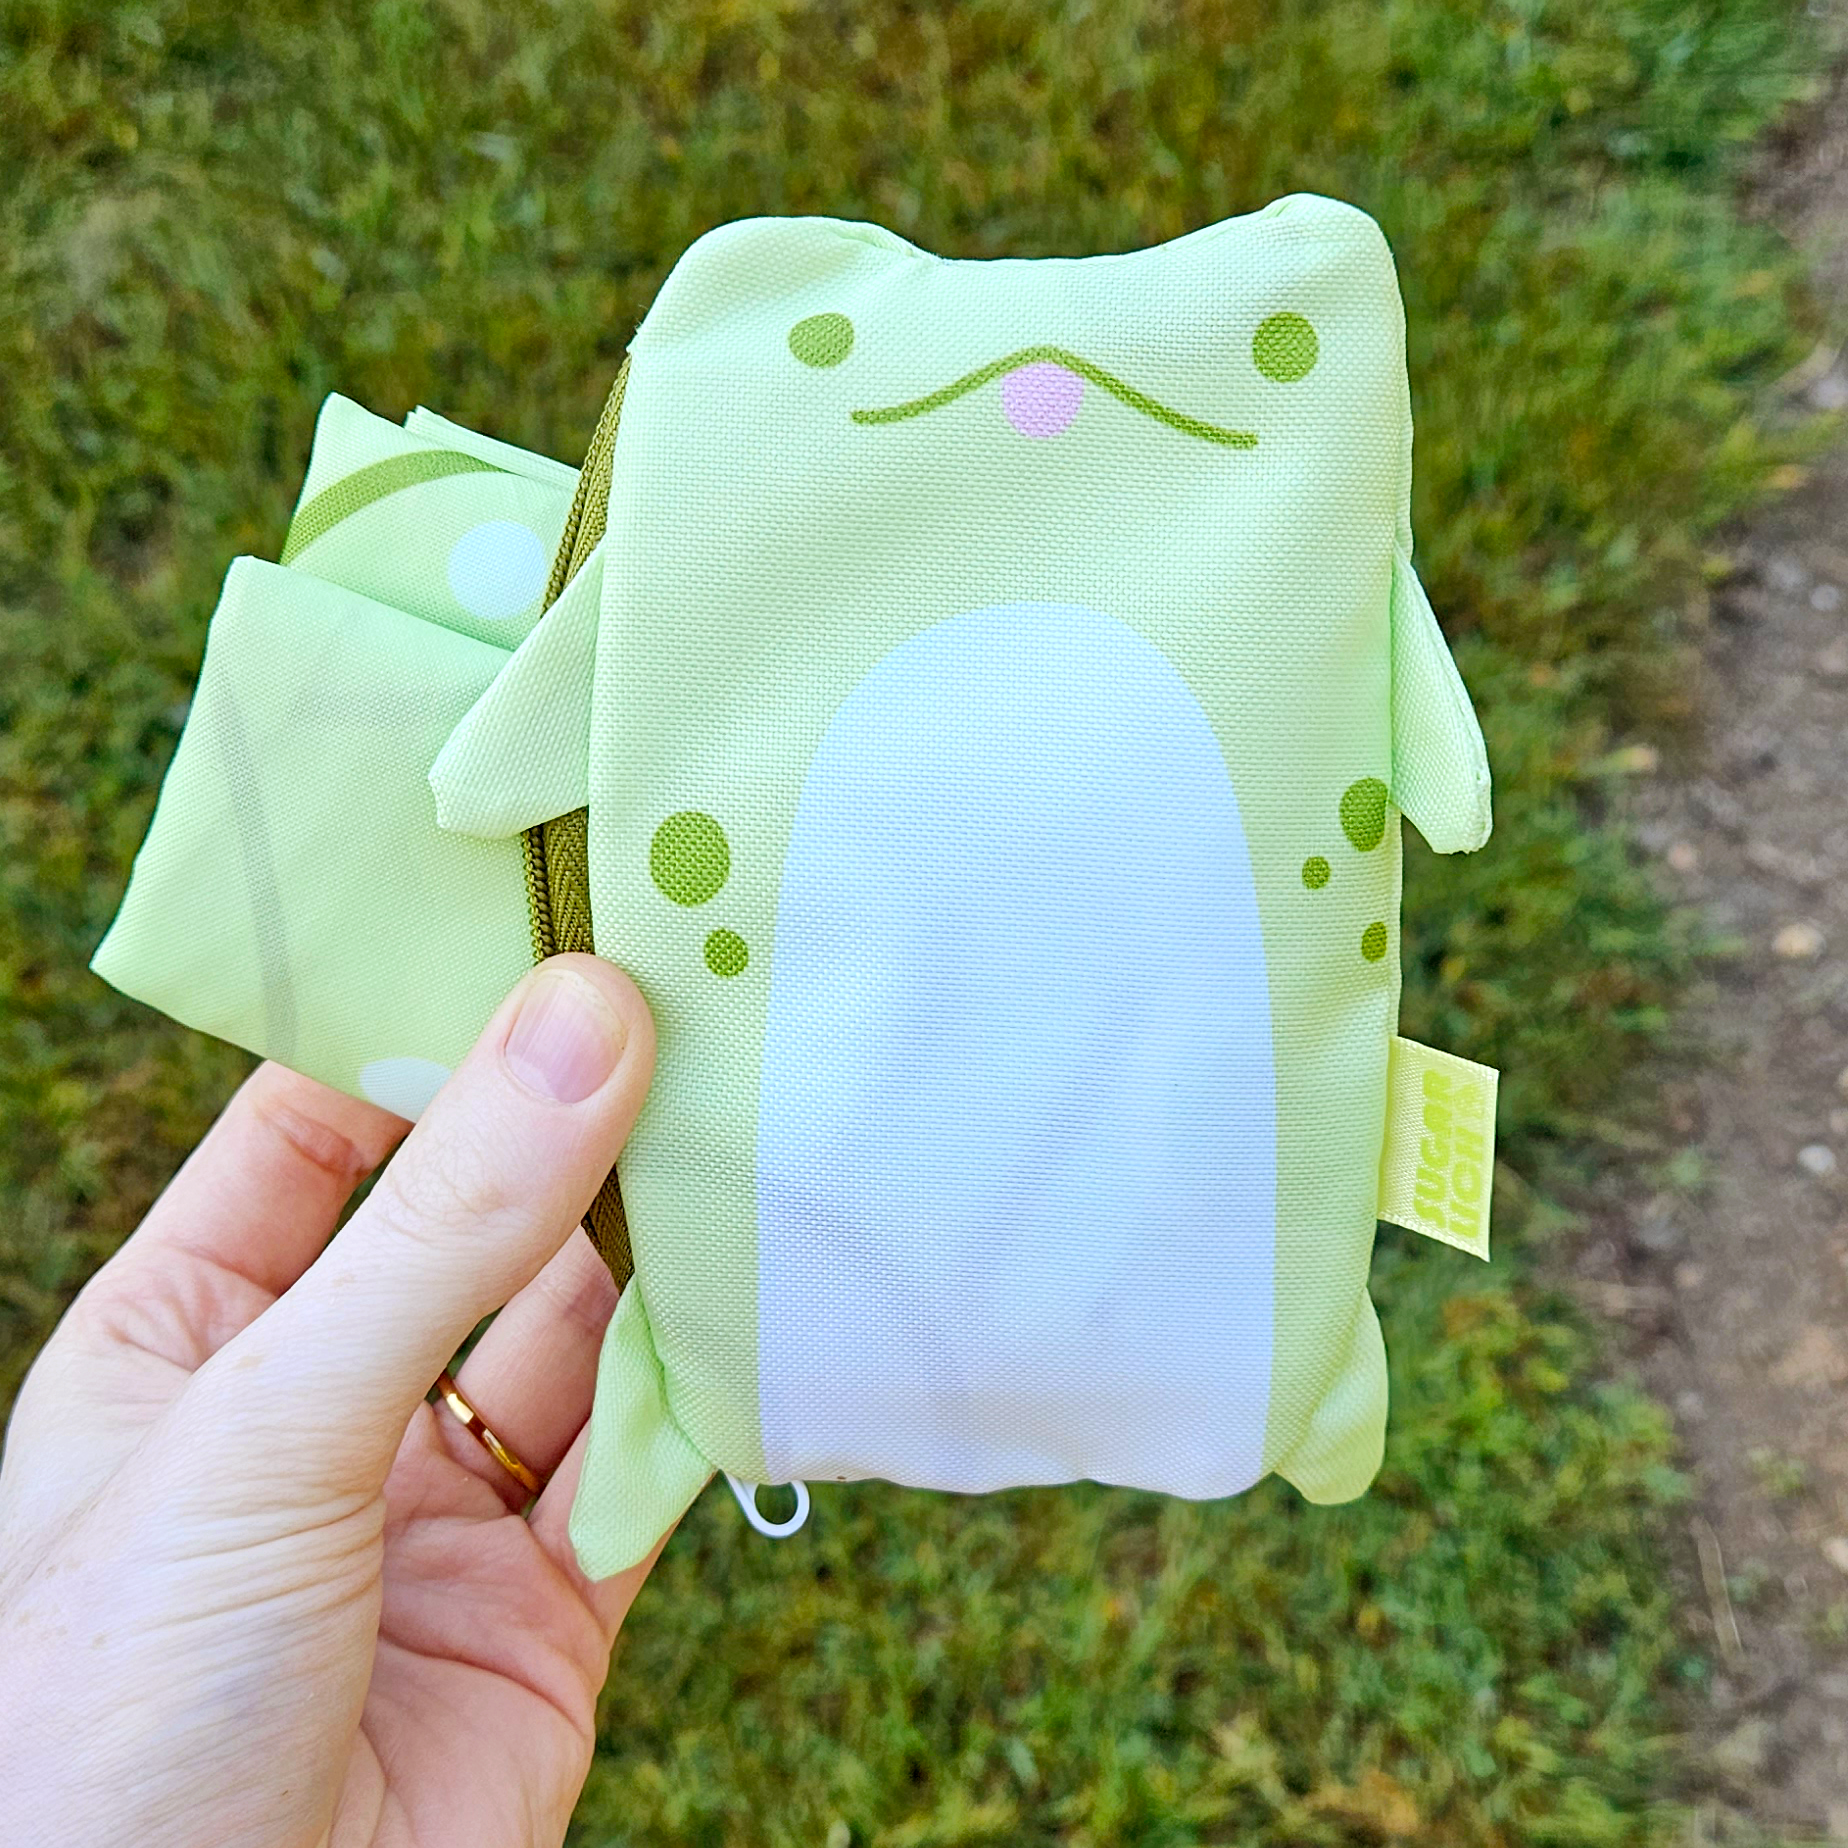 Frog Tote Bag by Sugar Lich